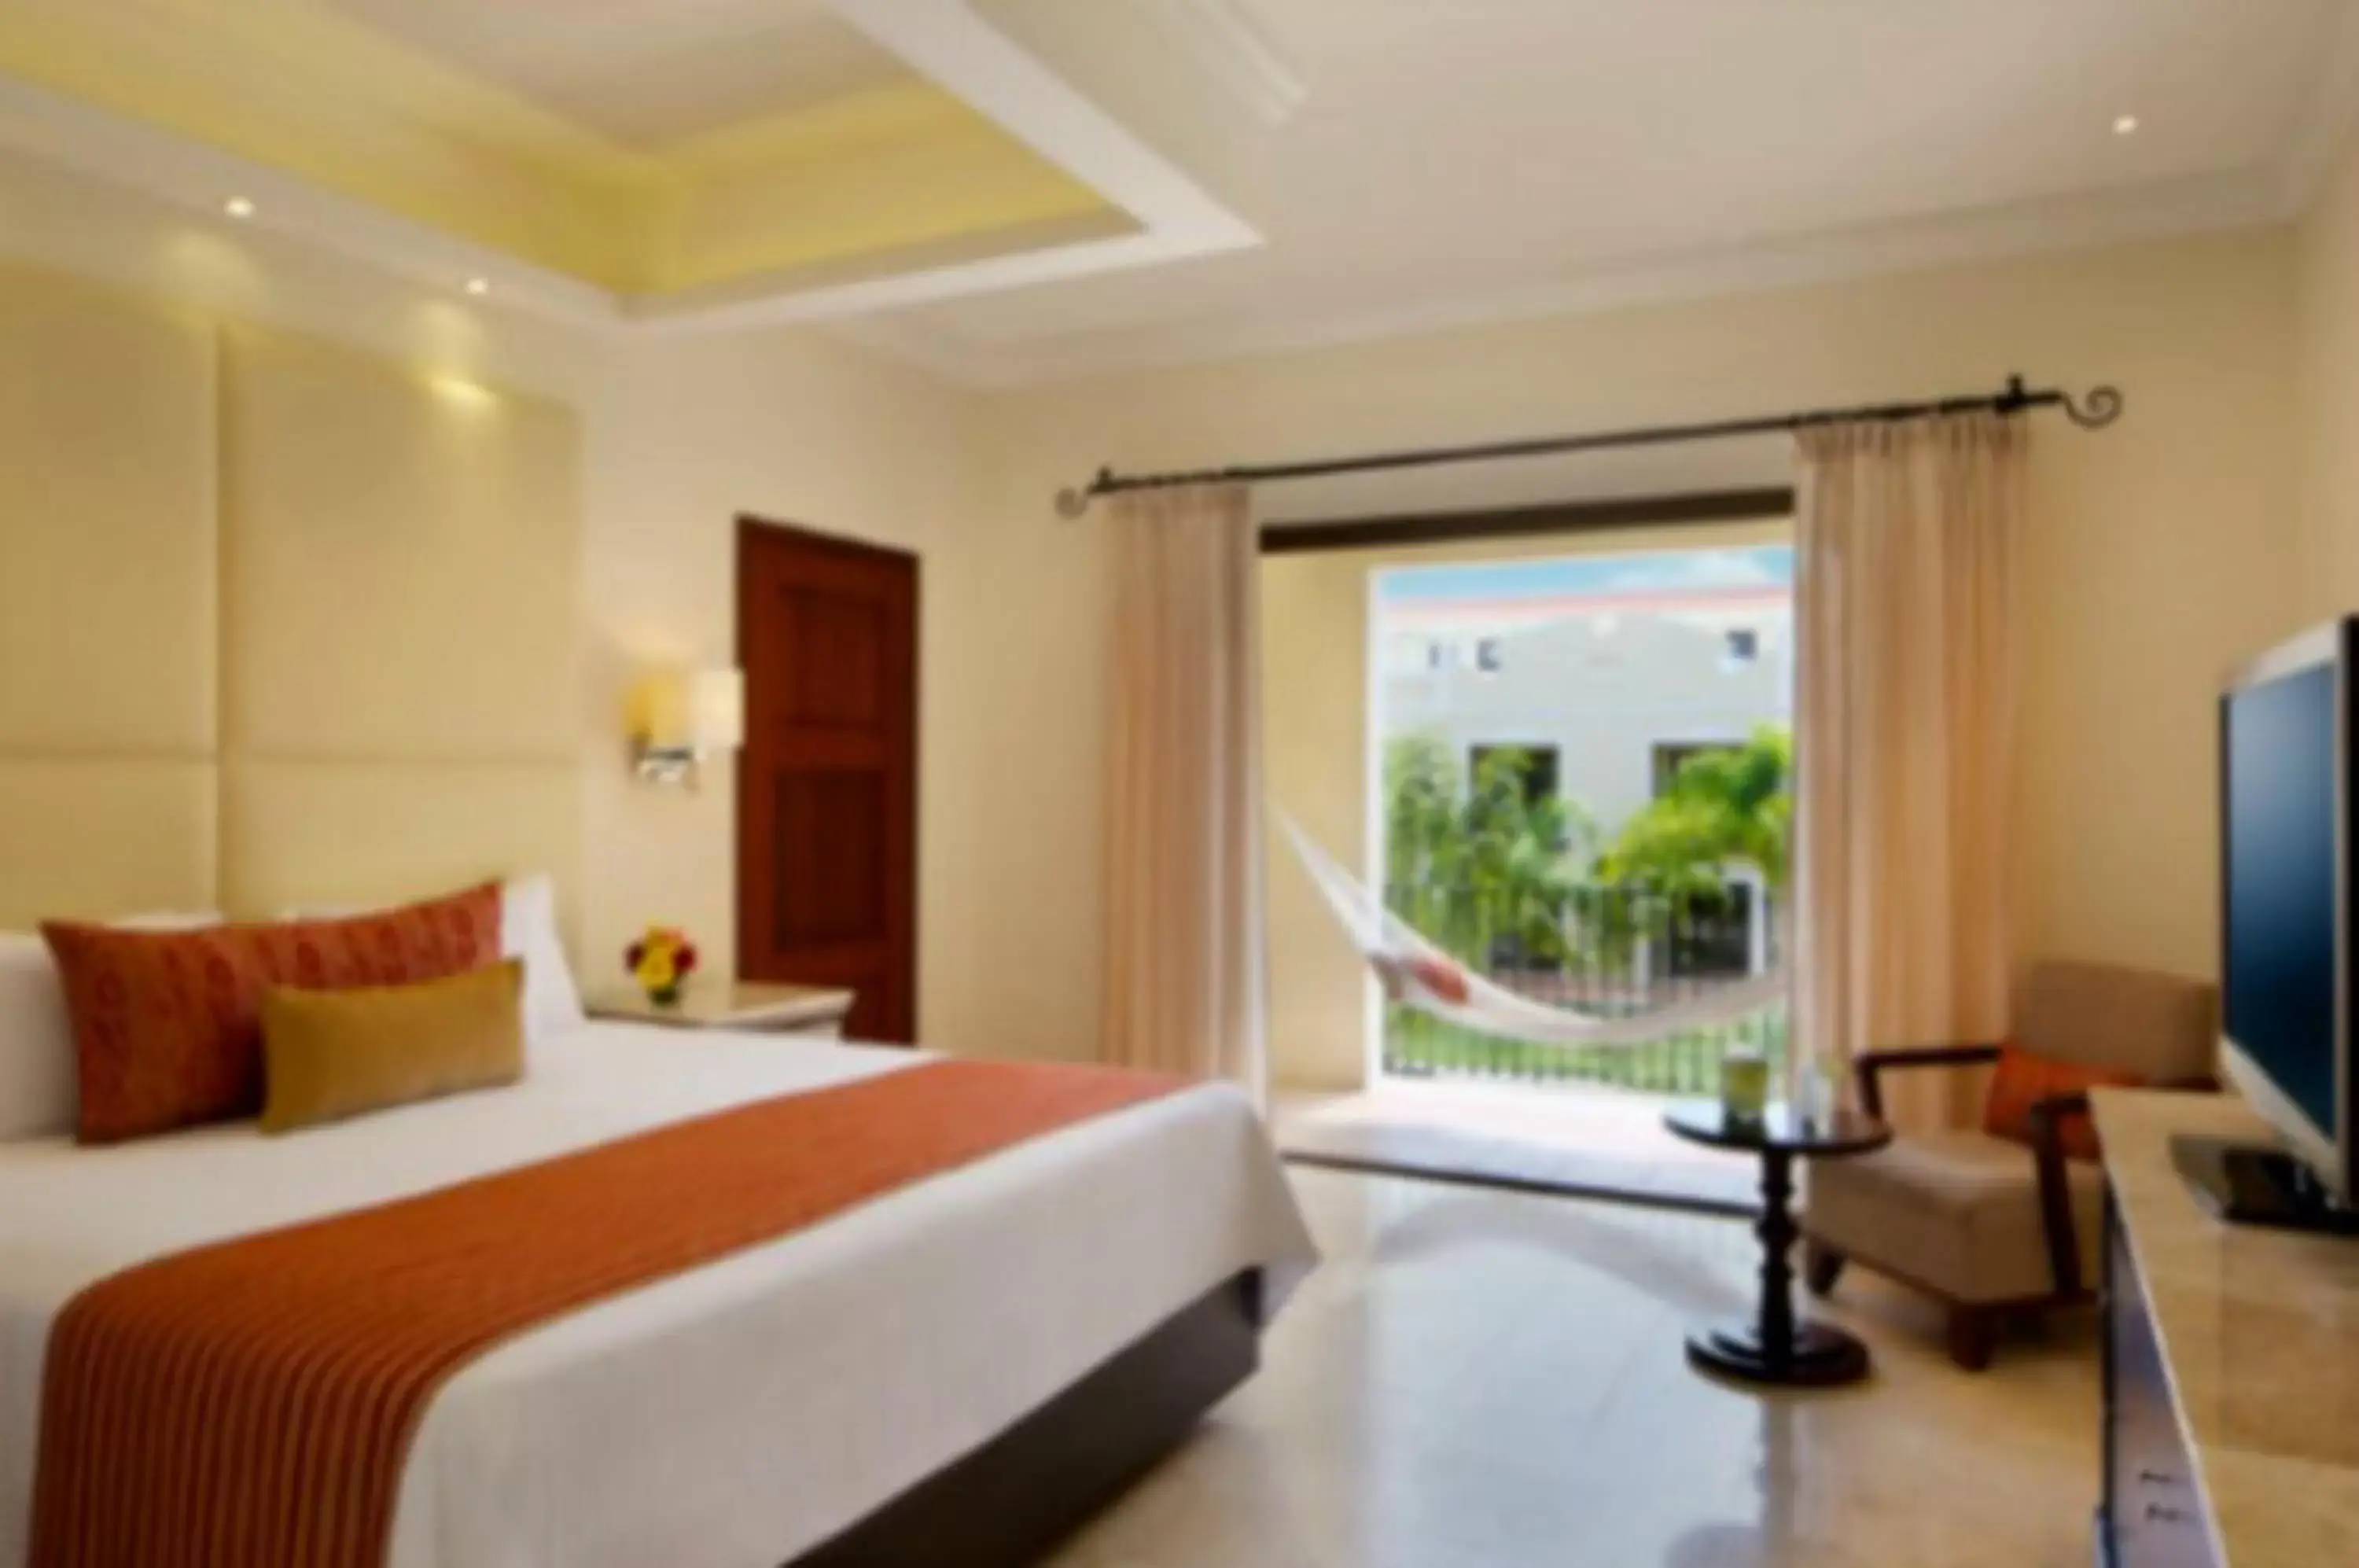 Garden, Bed in Dreams Tulum Resort & Spa